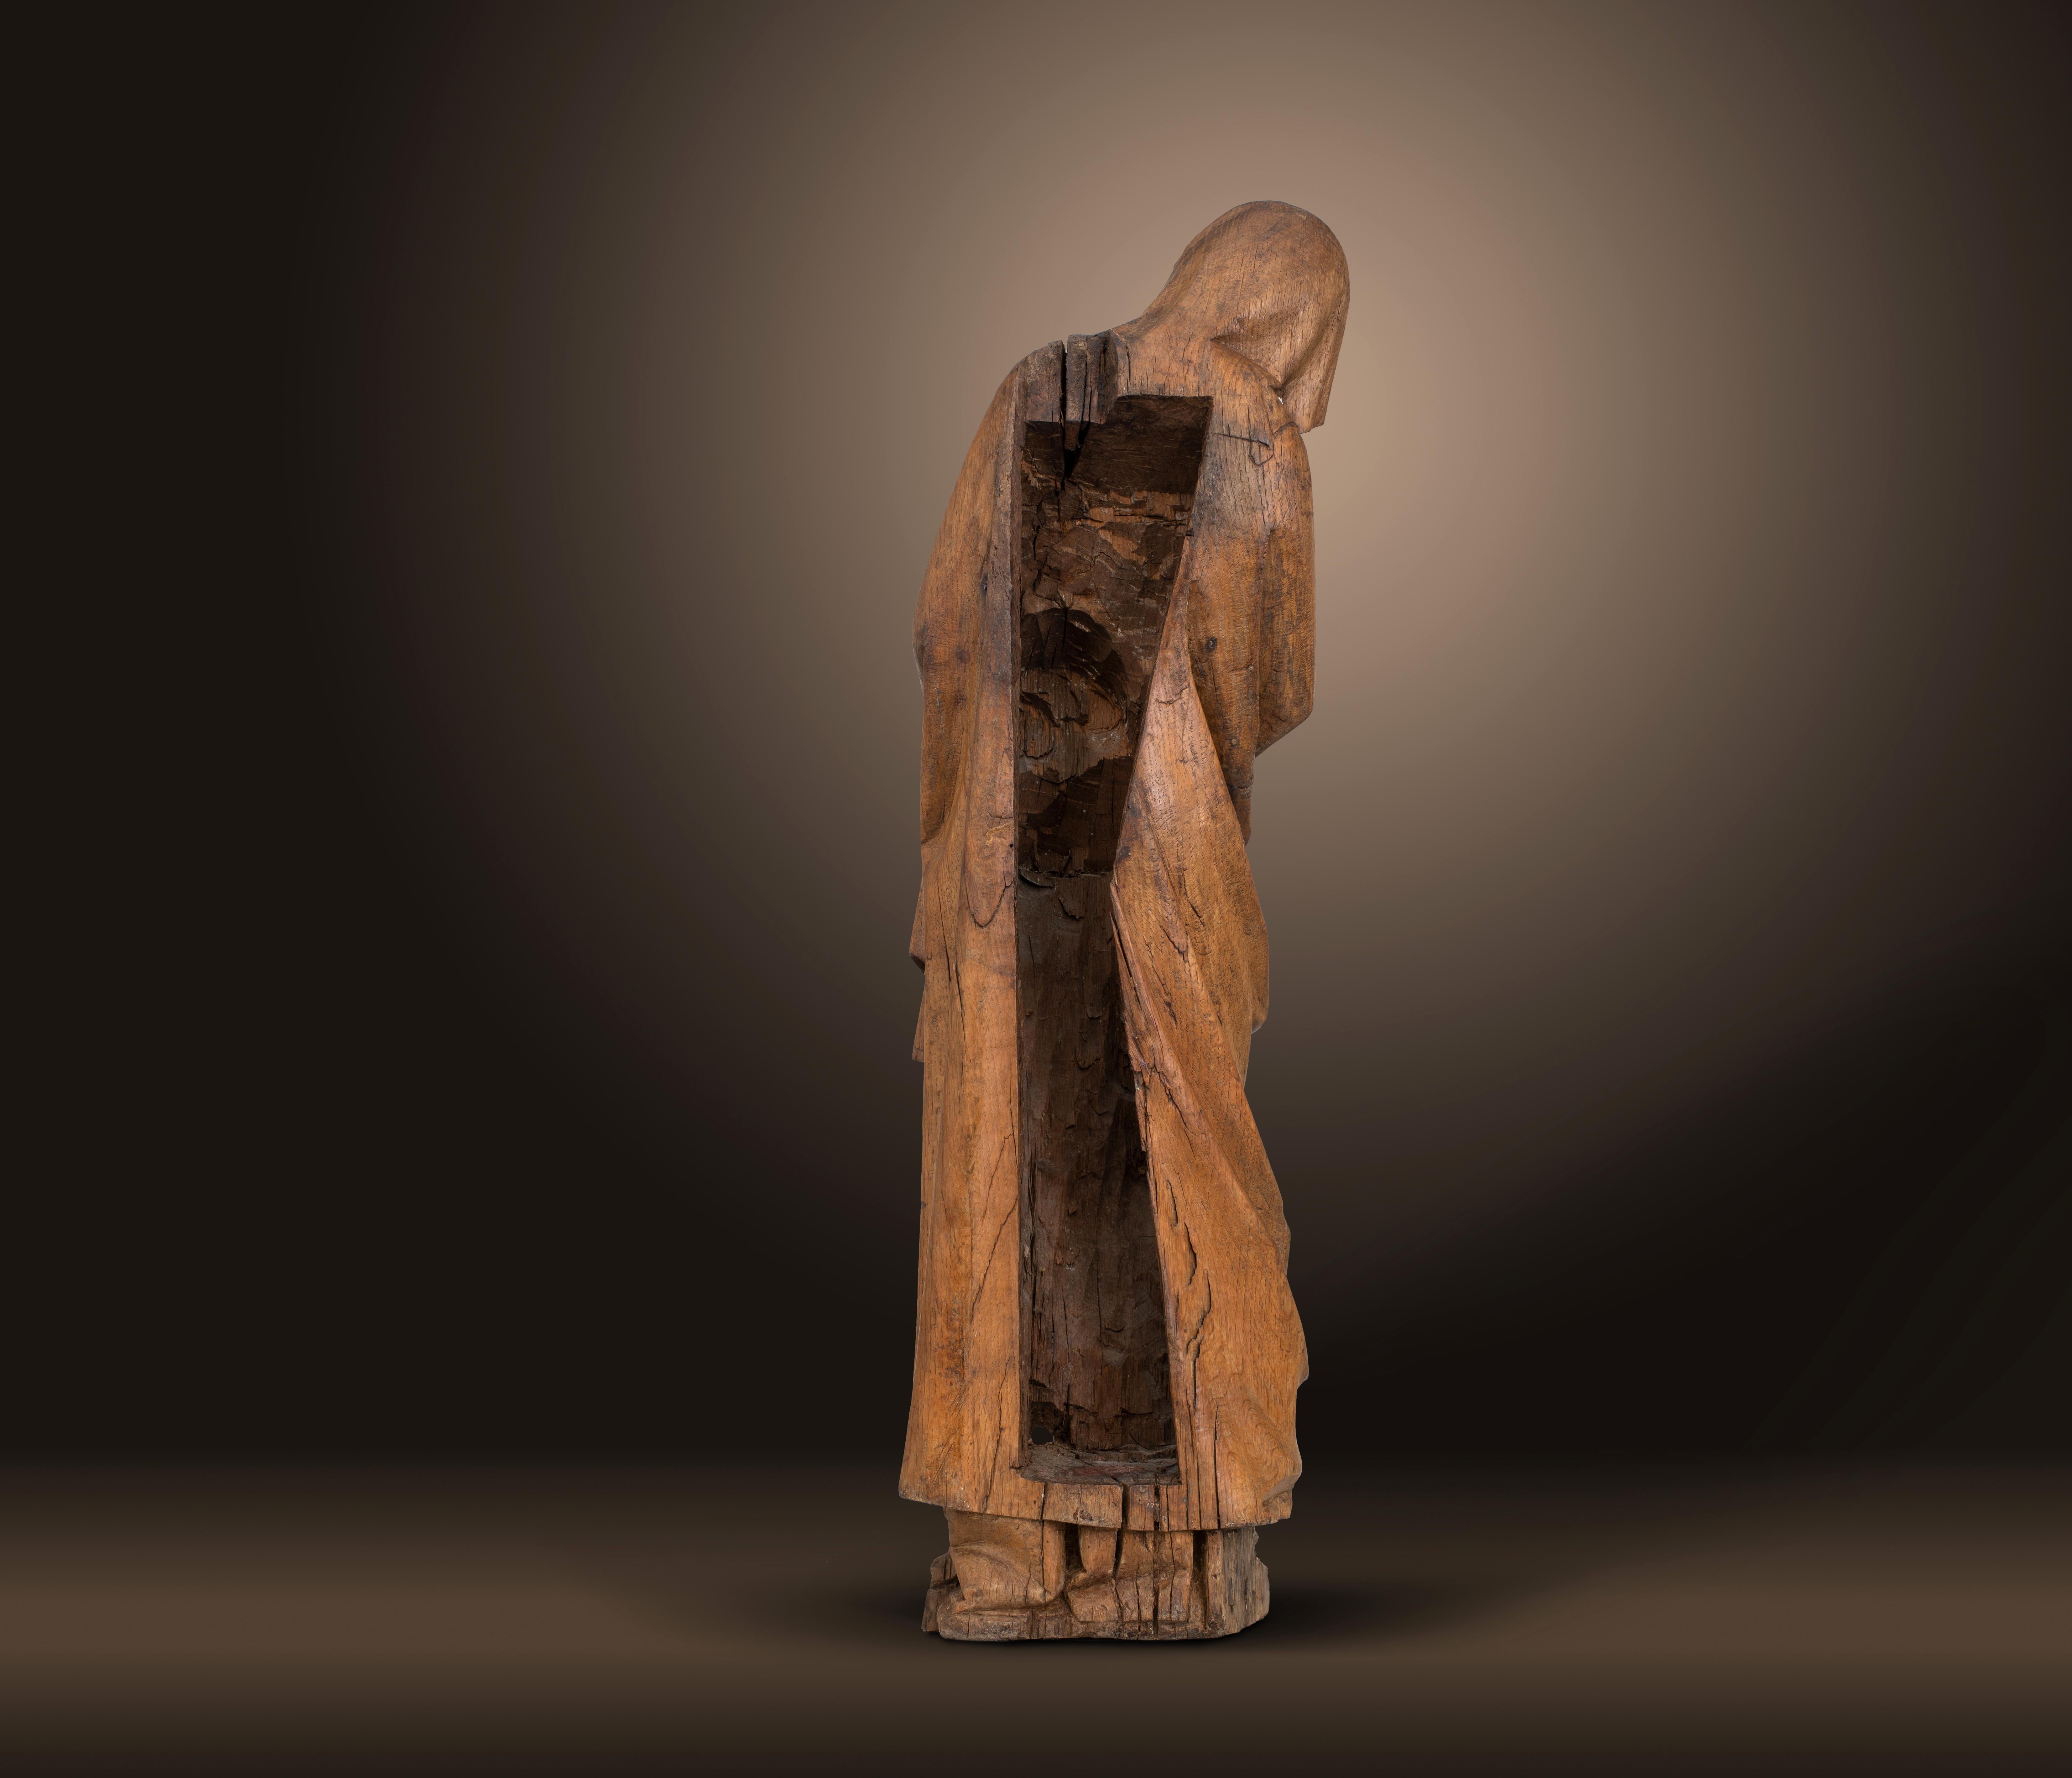 MADONNA
Il DE FRANCE/PARIS
Around 1270
Oak wood carved
Height 79cm